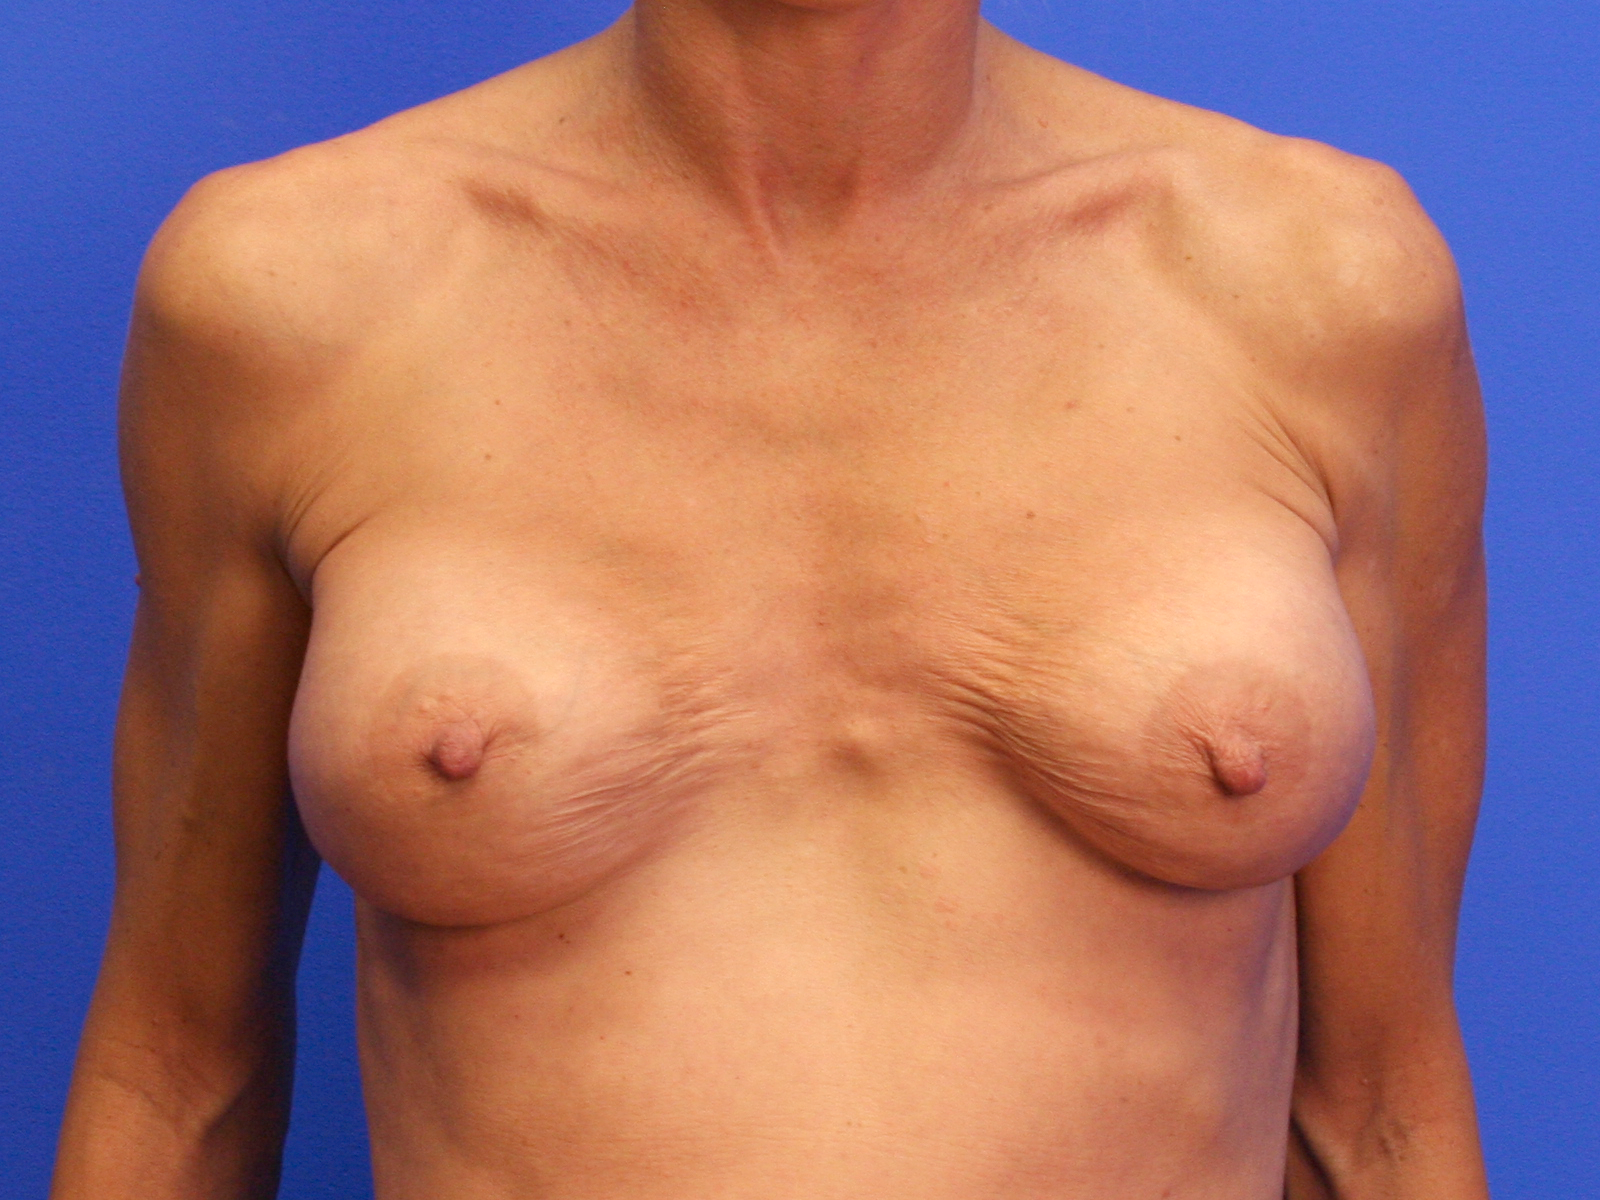 Breast Surgery